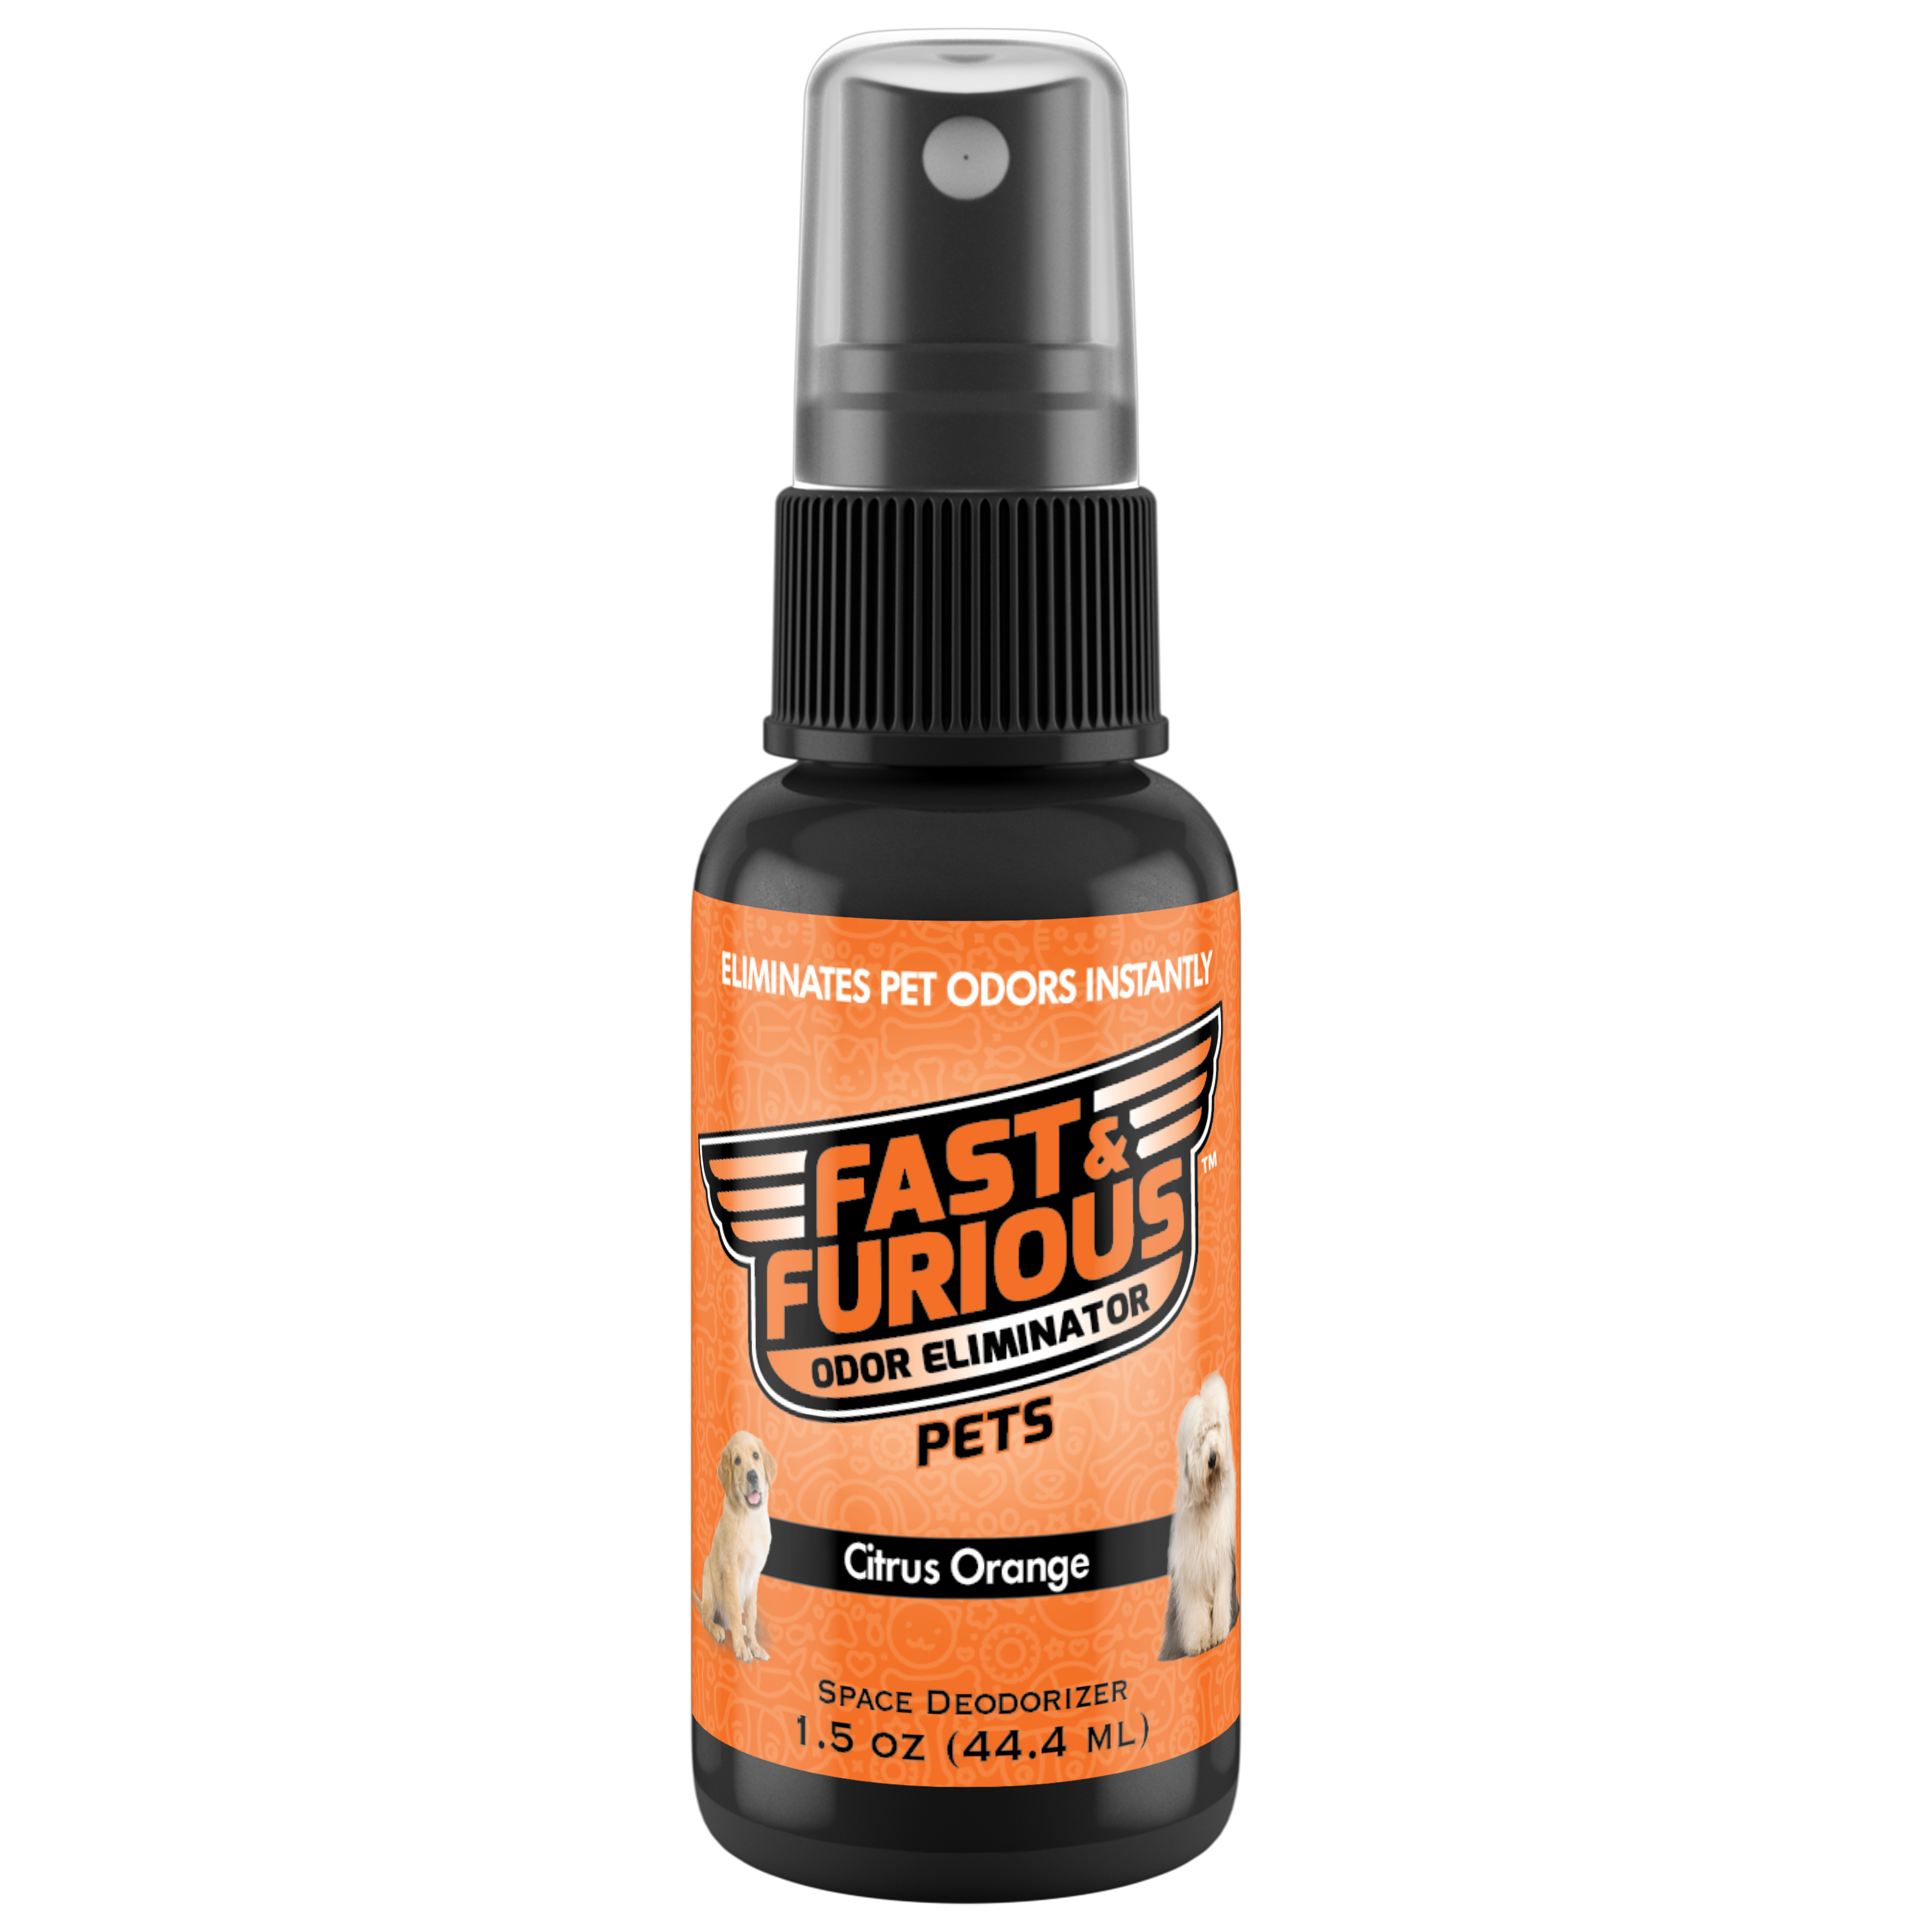 Fast and Furious Pets Odor Eliminator - Citrus Orange Scent